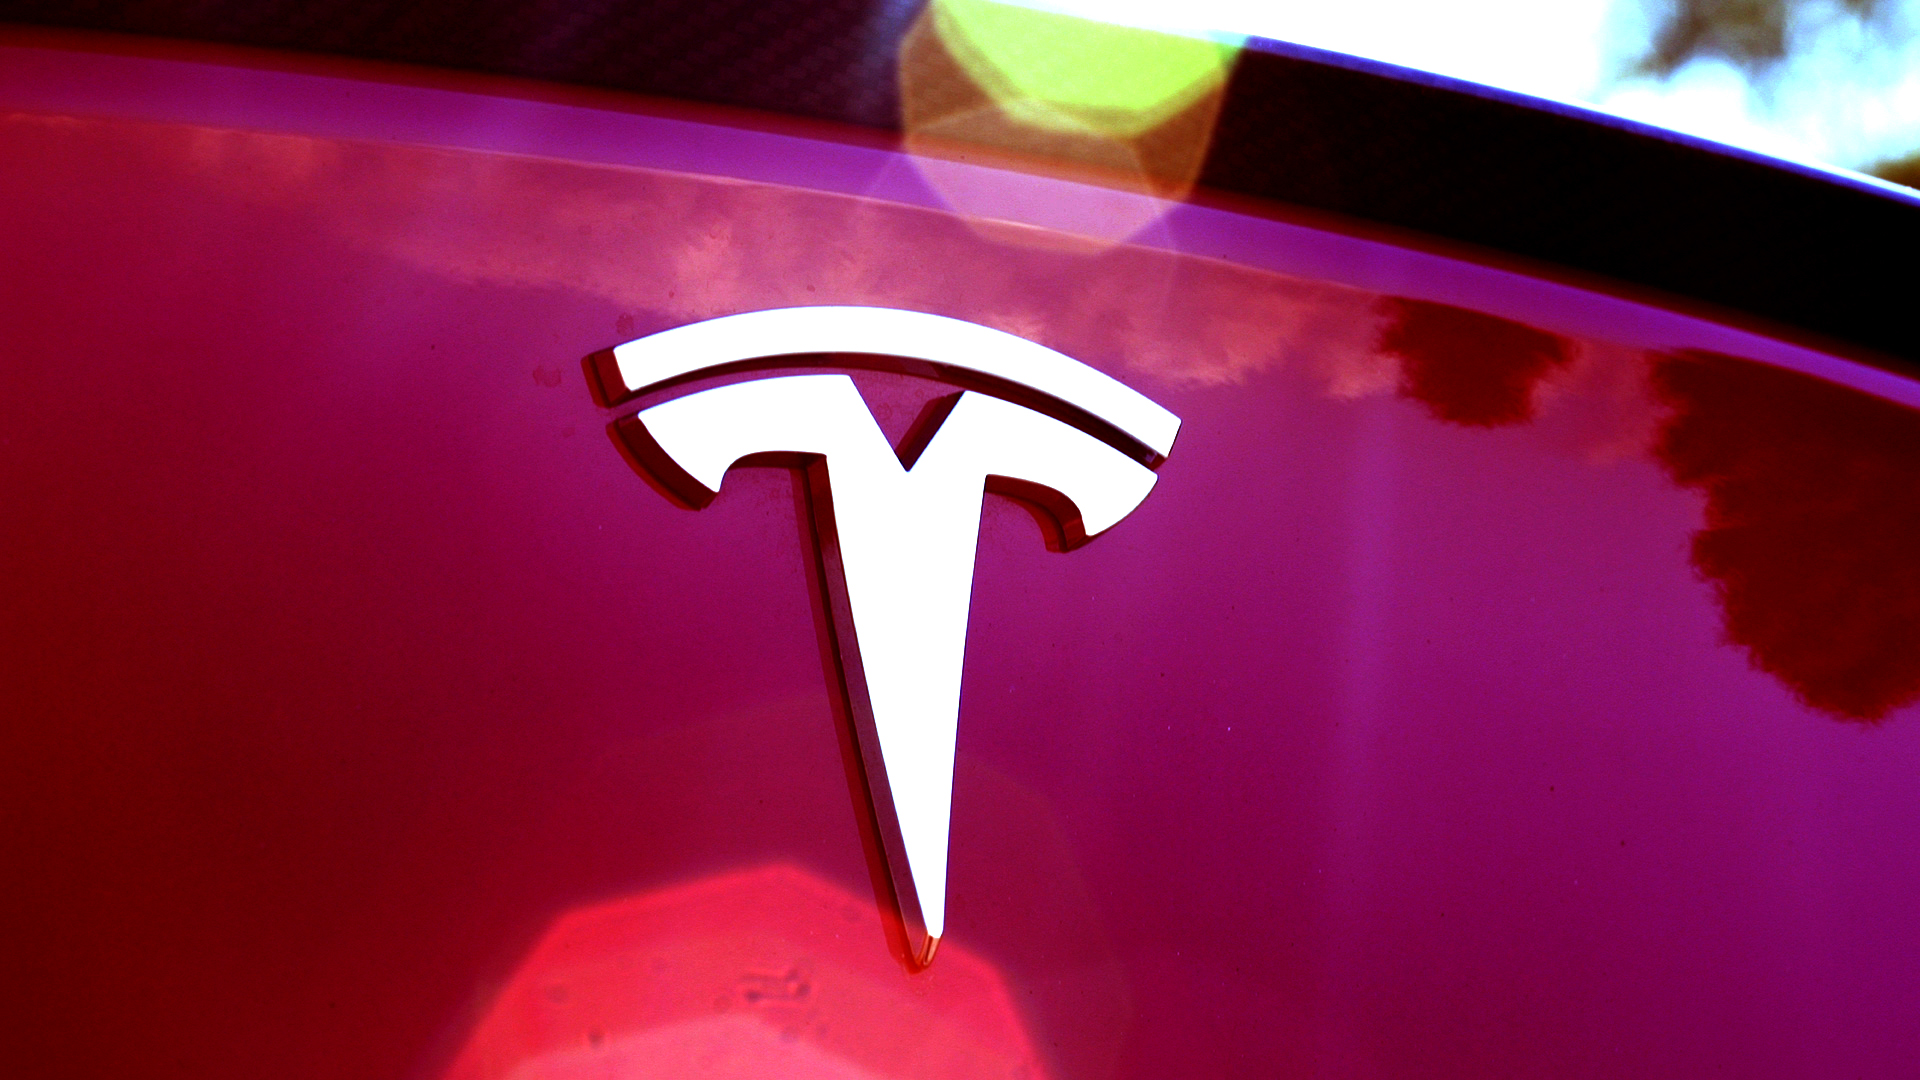 Tesla Recalling All Its Model S Sedans Over Seatbelt Issue